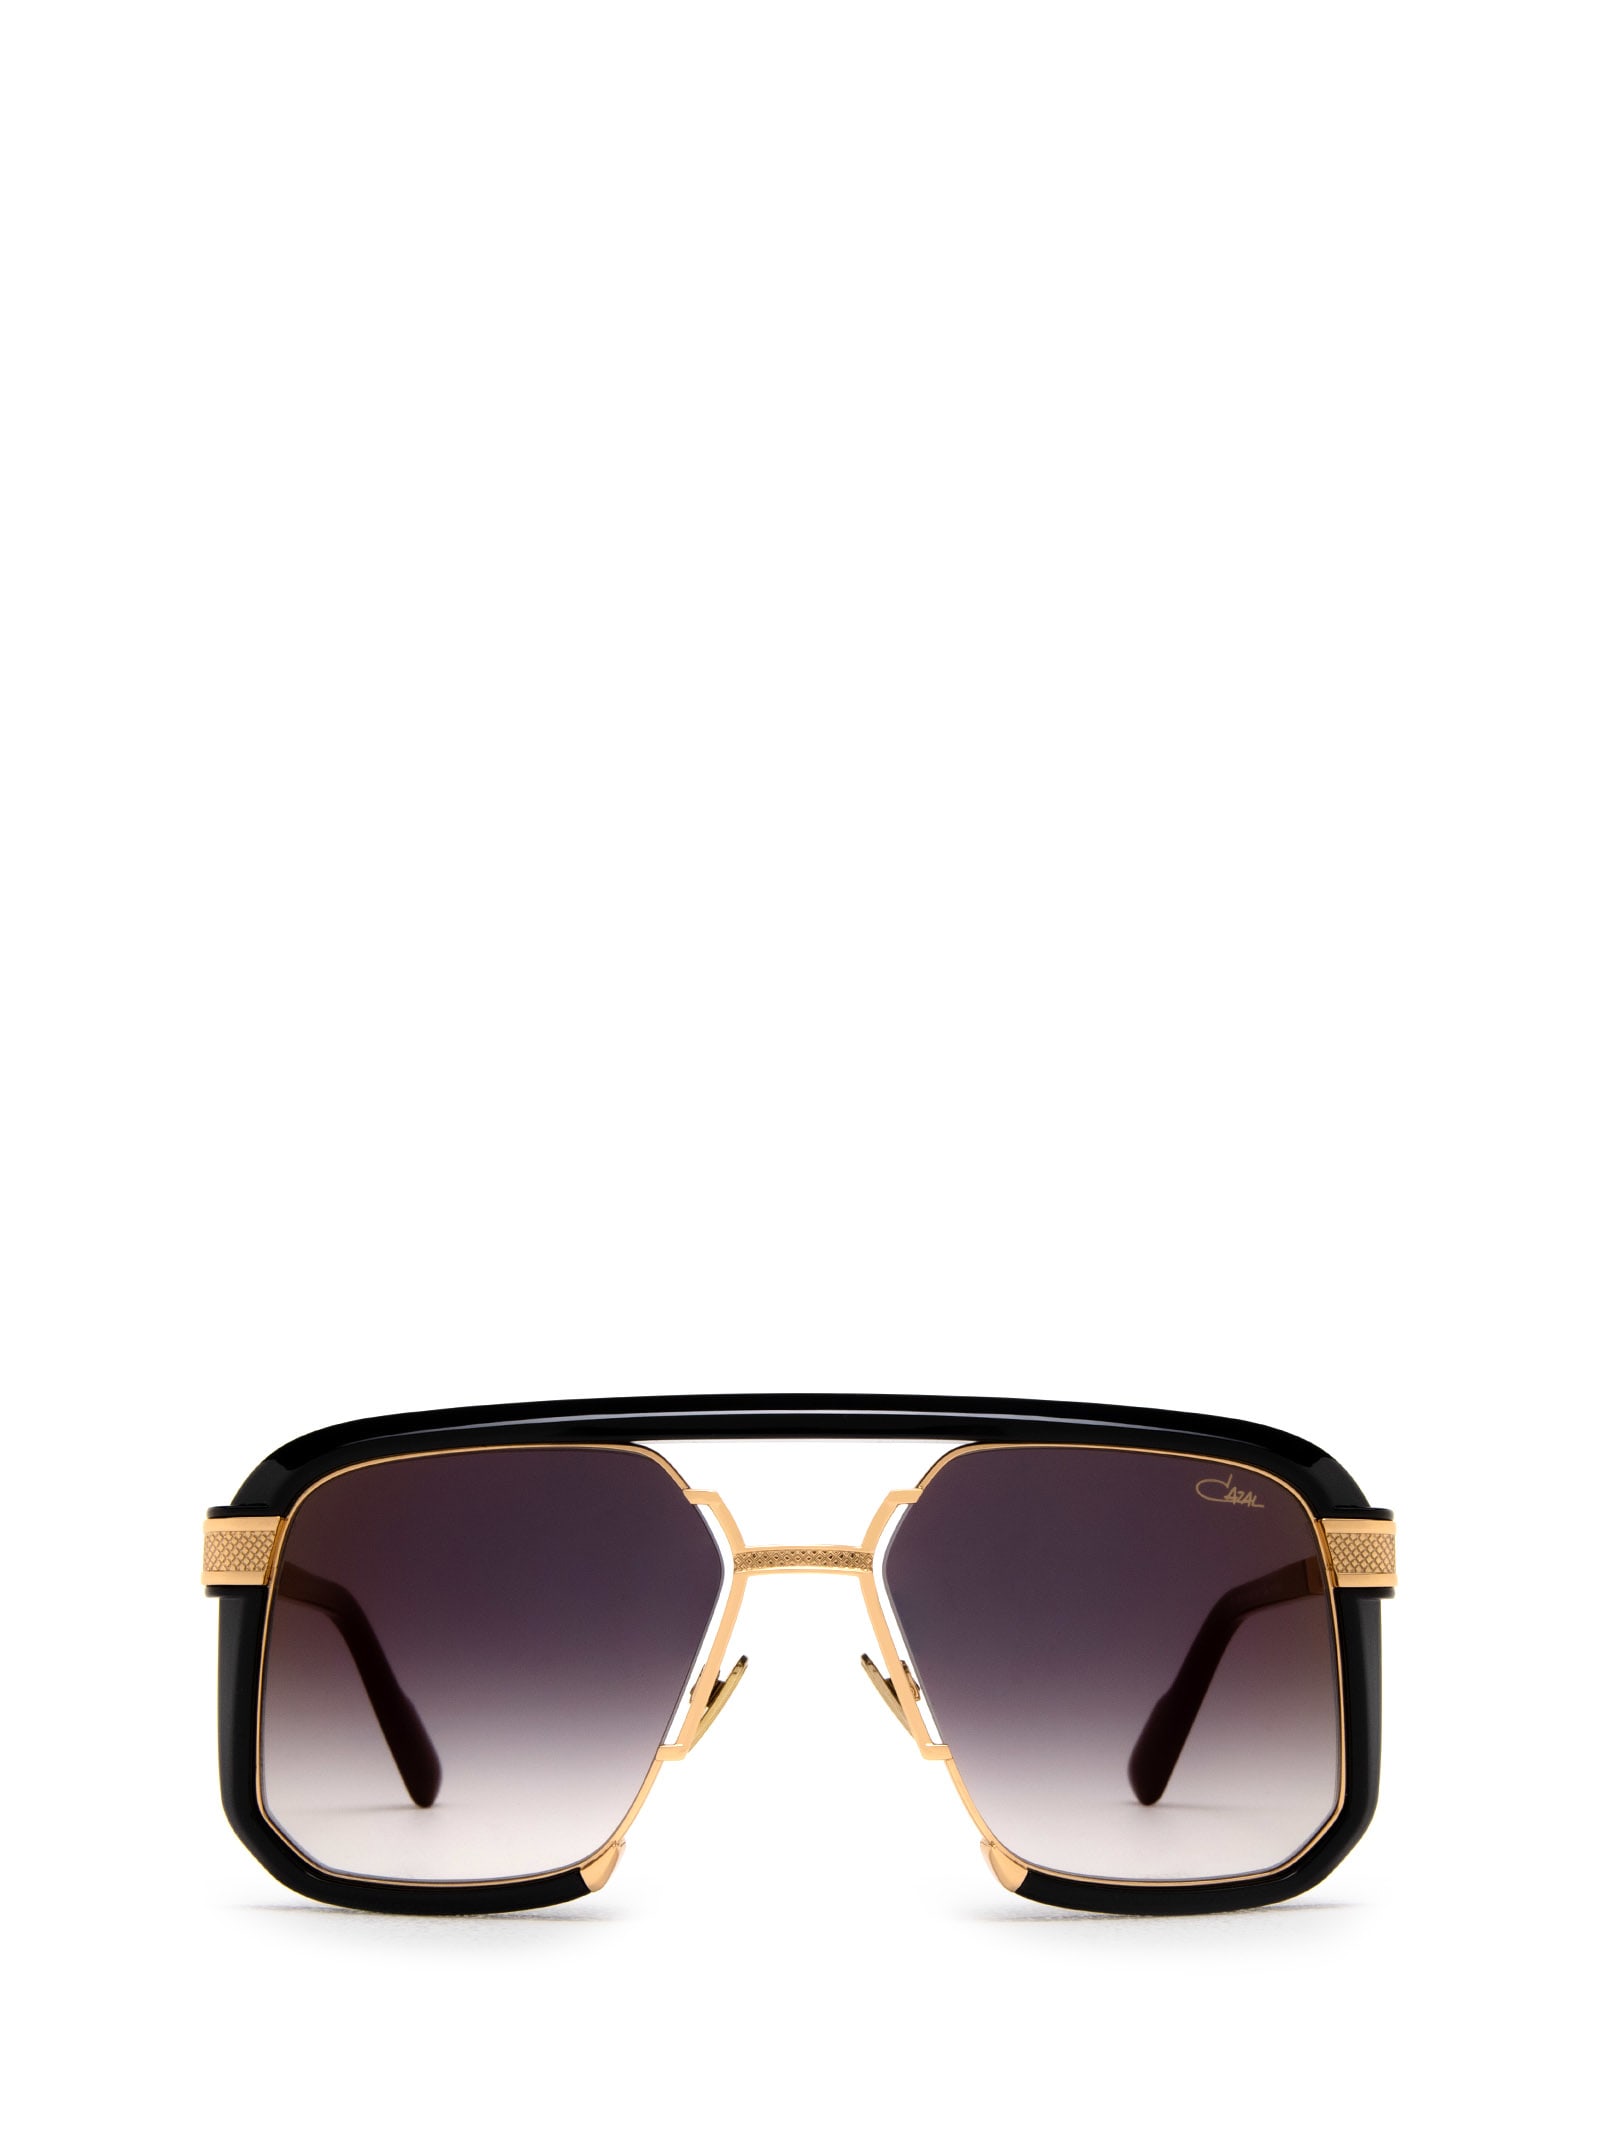 Cazal 682 Black - Gold Sunglasses